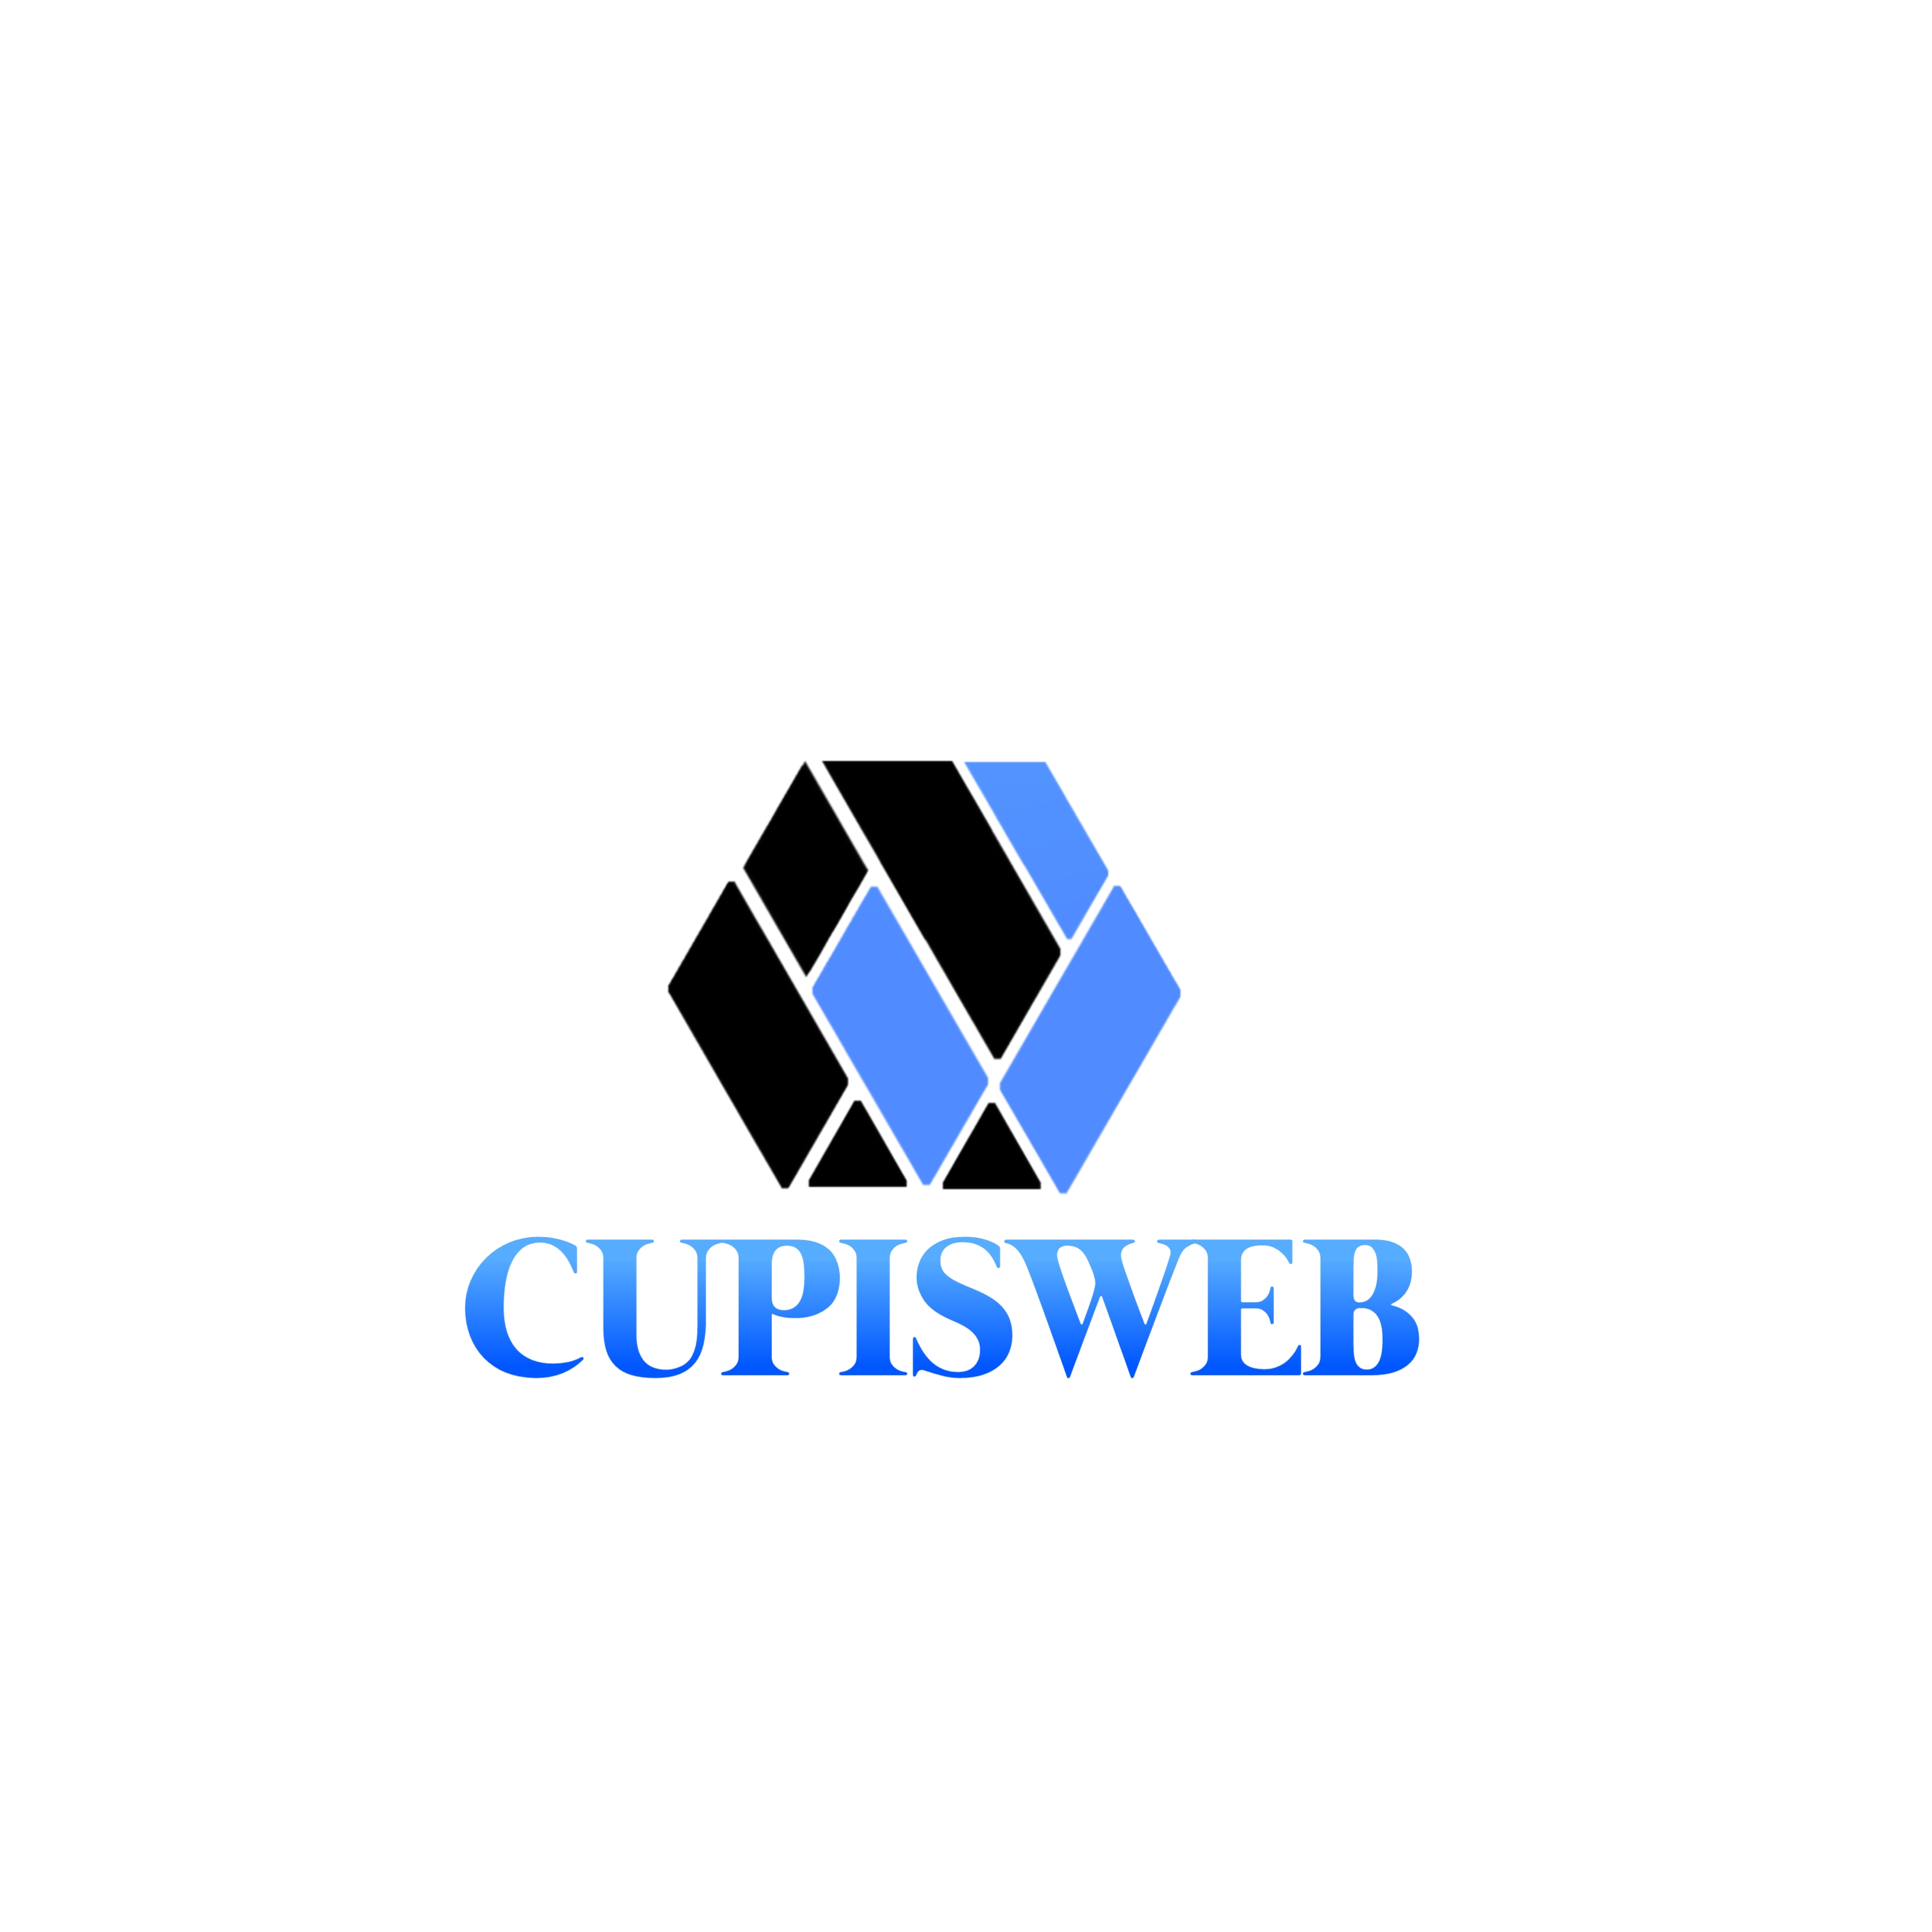 Cupisweb